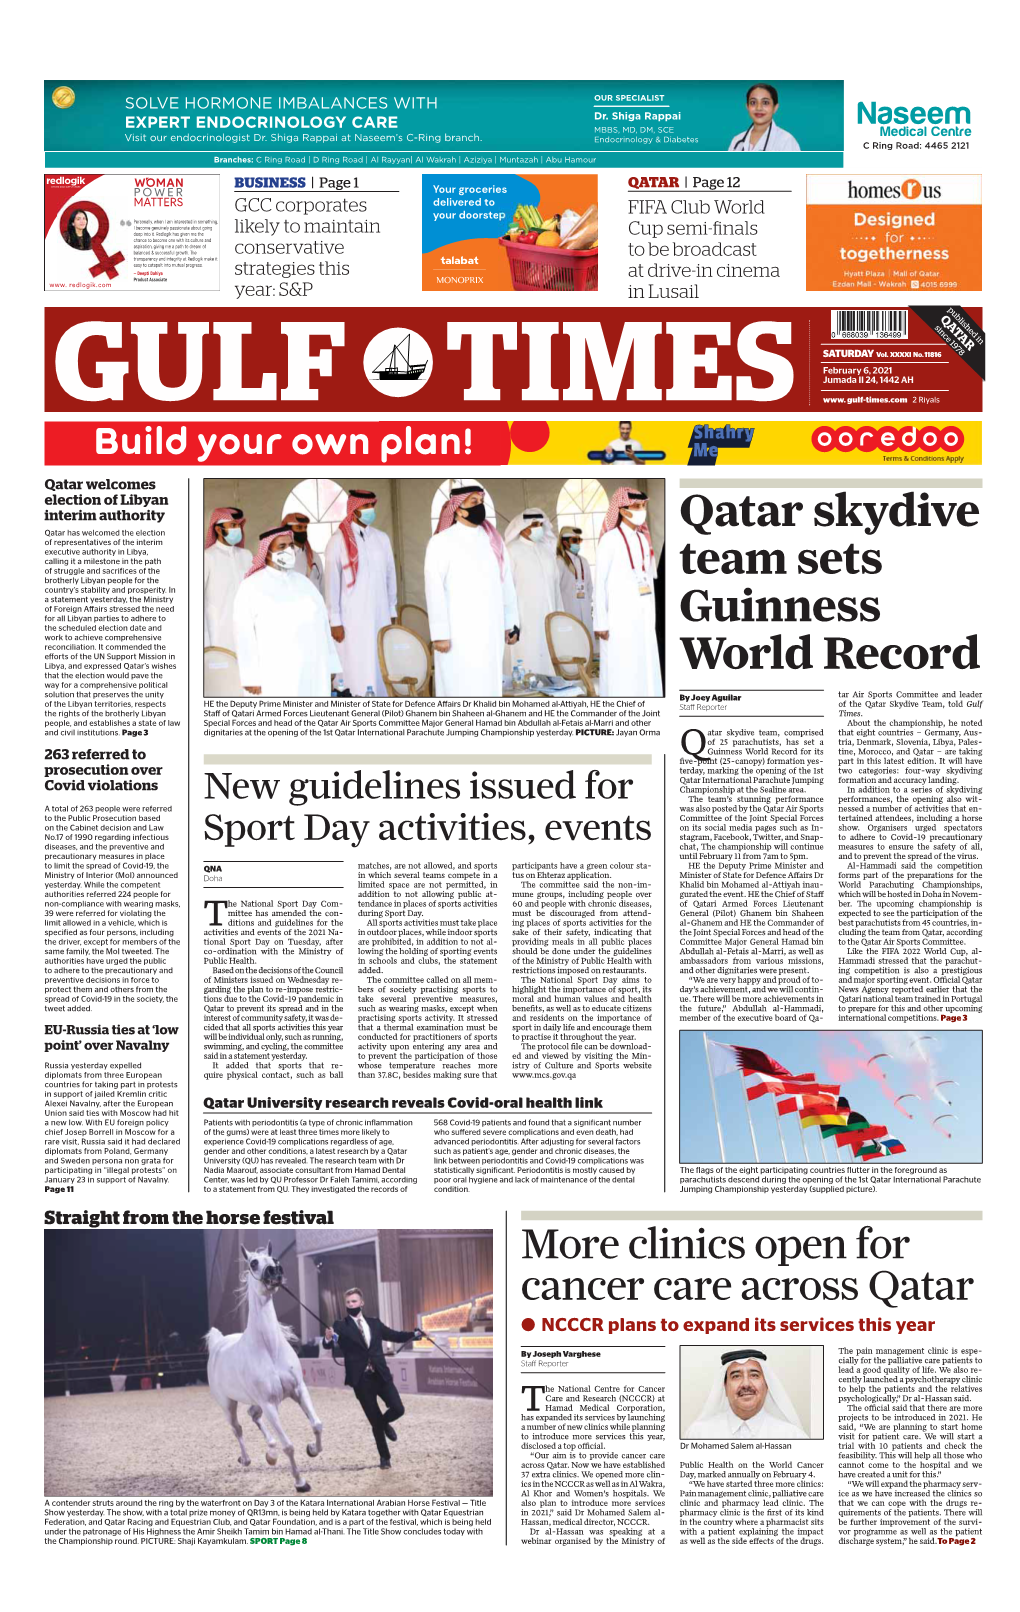 Qatar Skydive Team Sets Guinness World Record